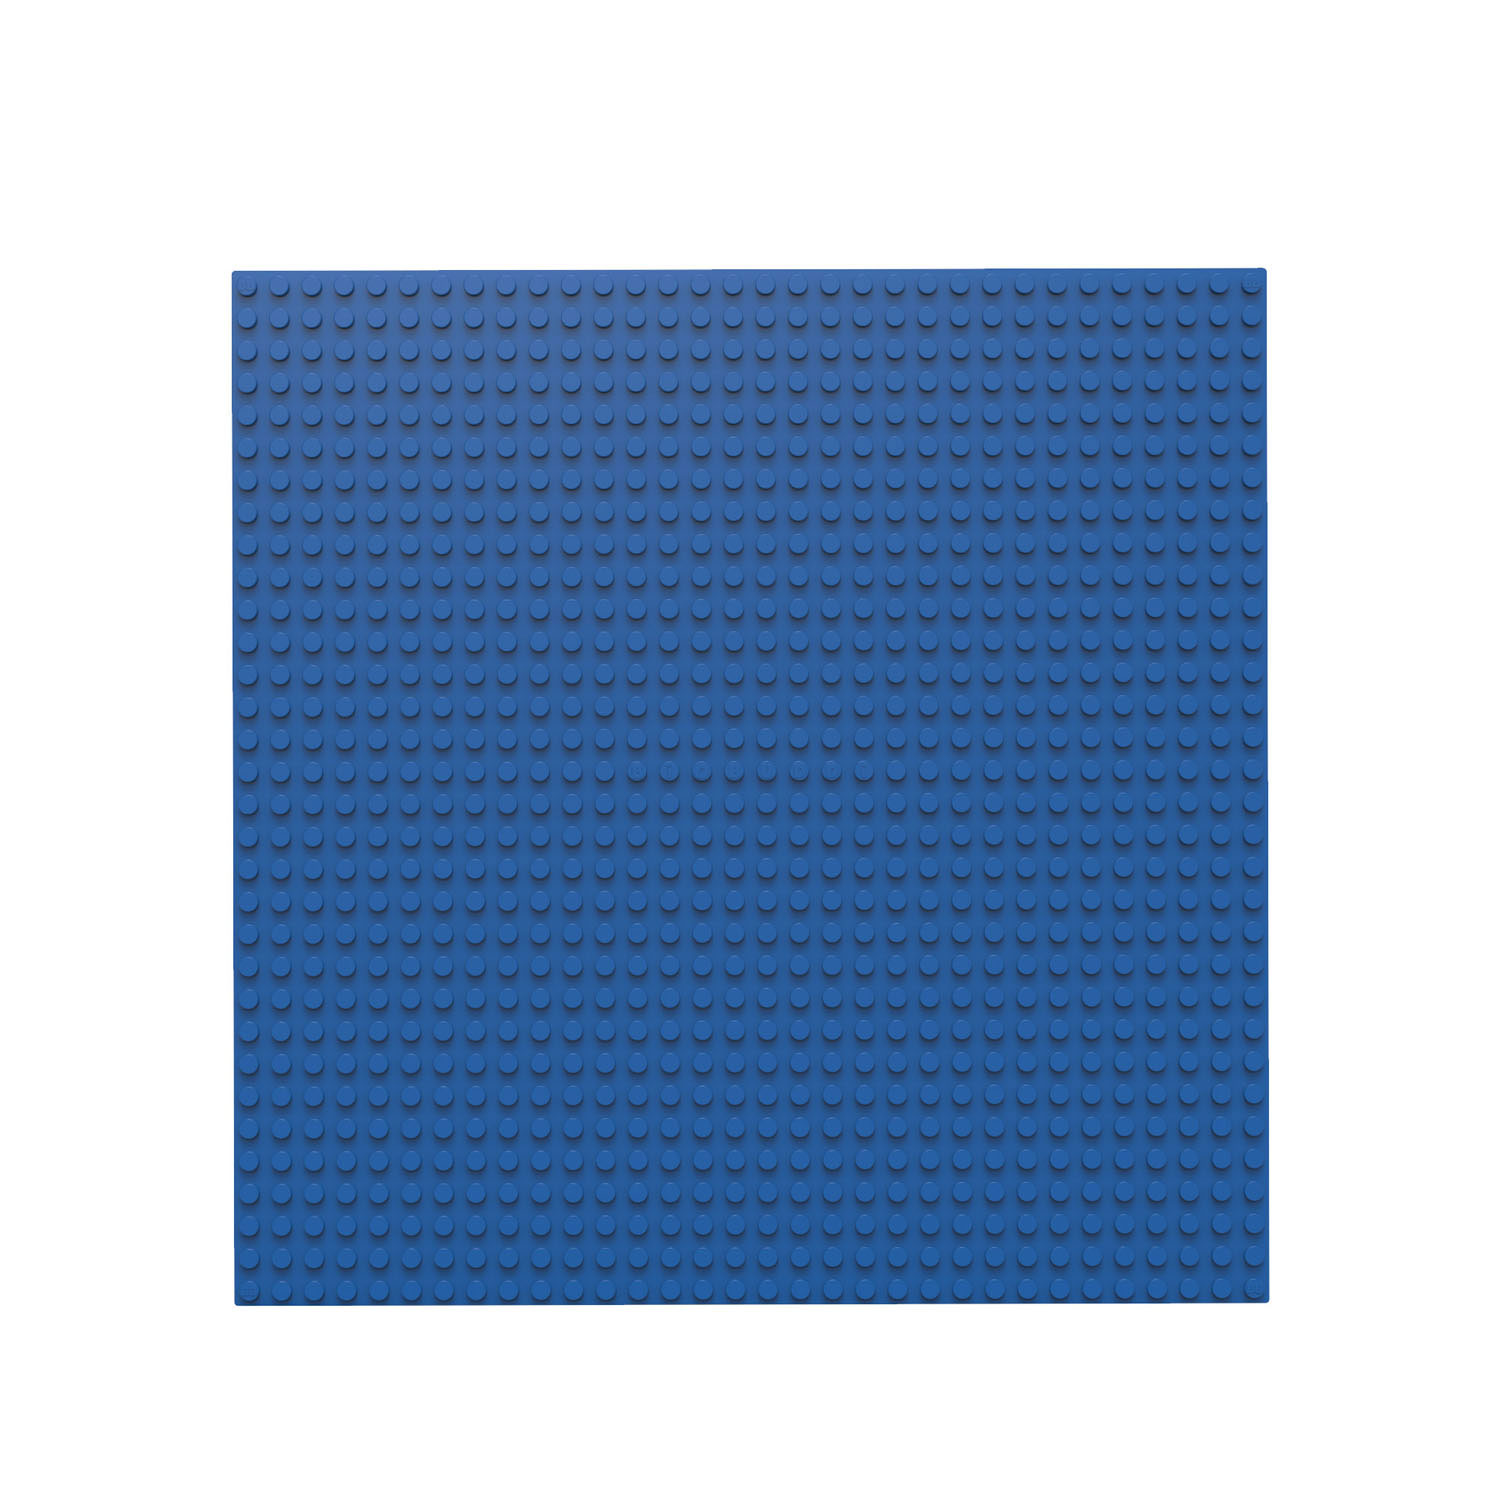 BiOBUDDi Grundplatte Blau, 32x32